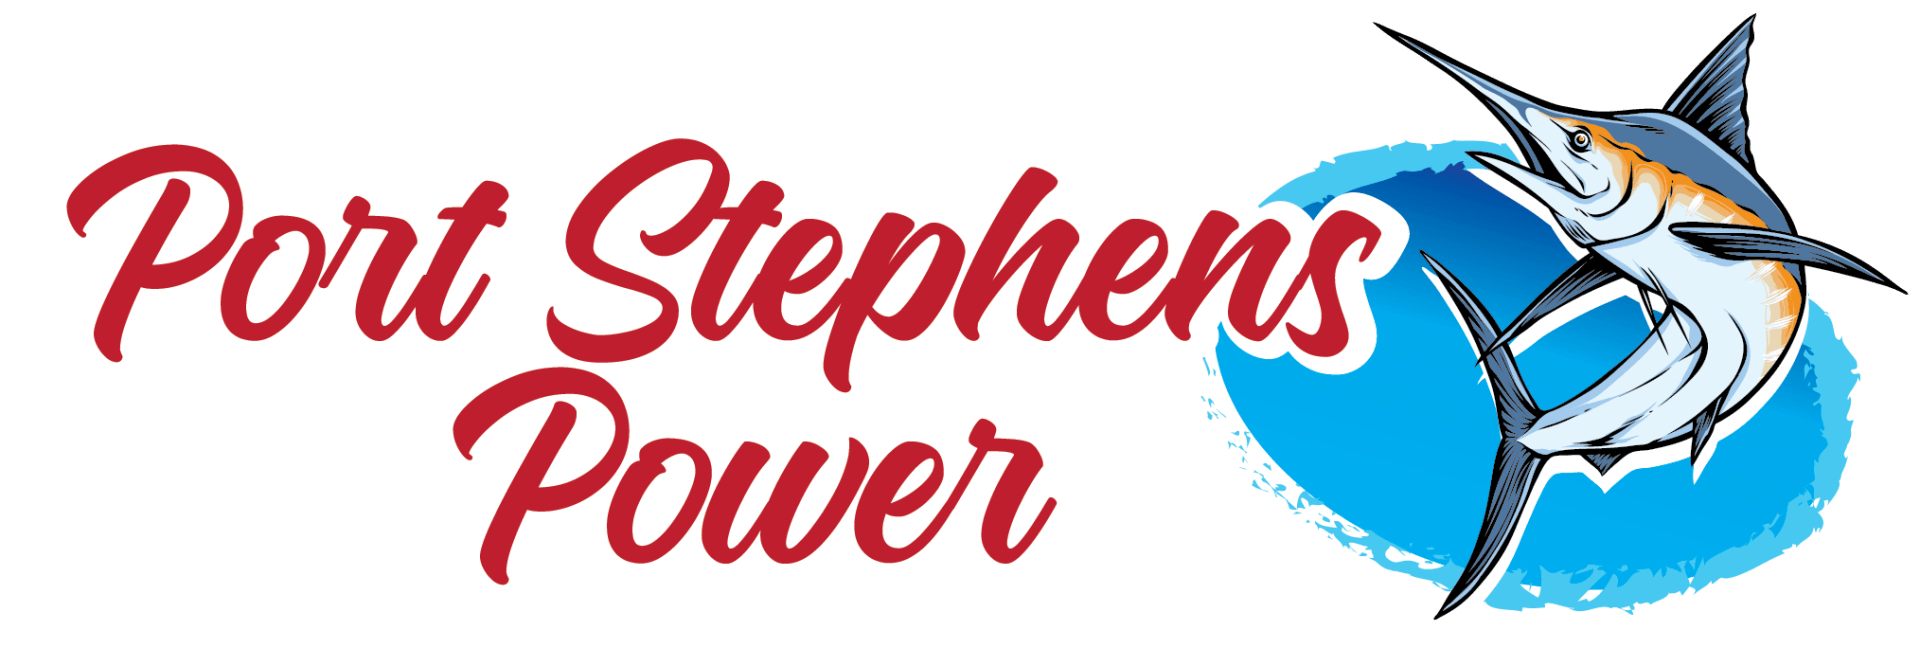 Port Stephens Power Logo